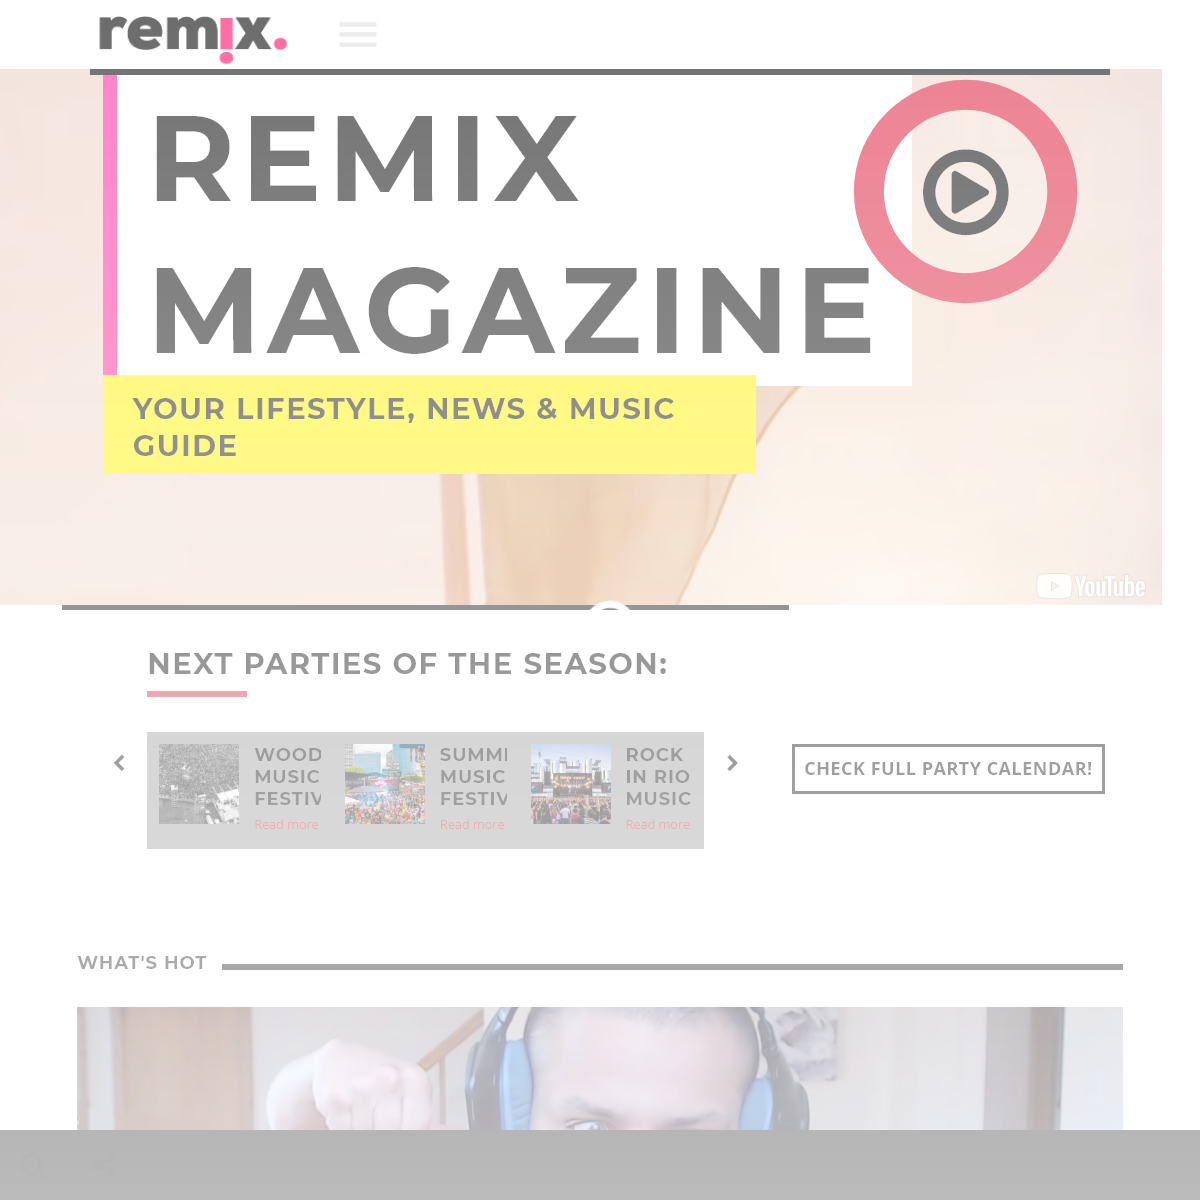 A complete backup of remixmag.com